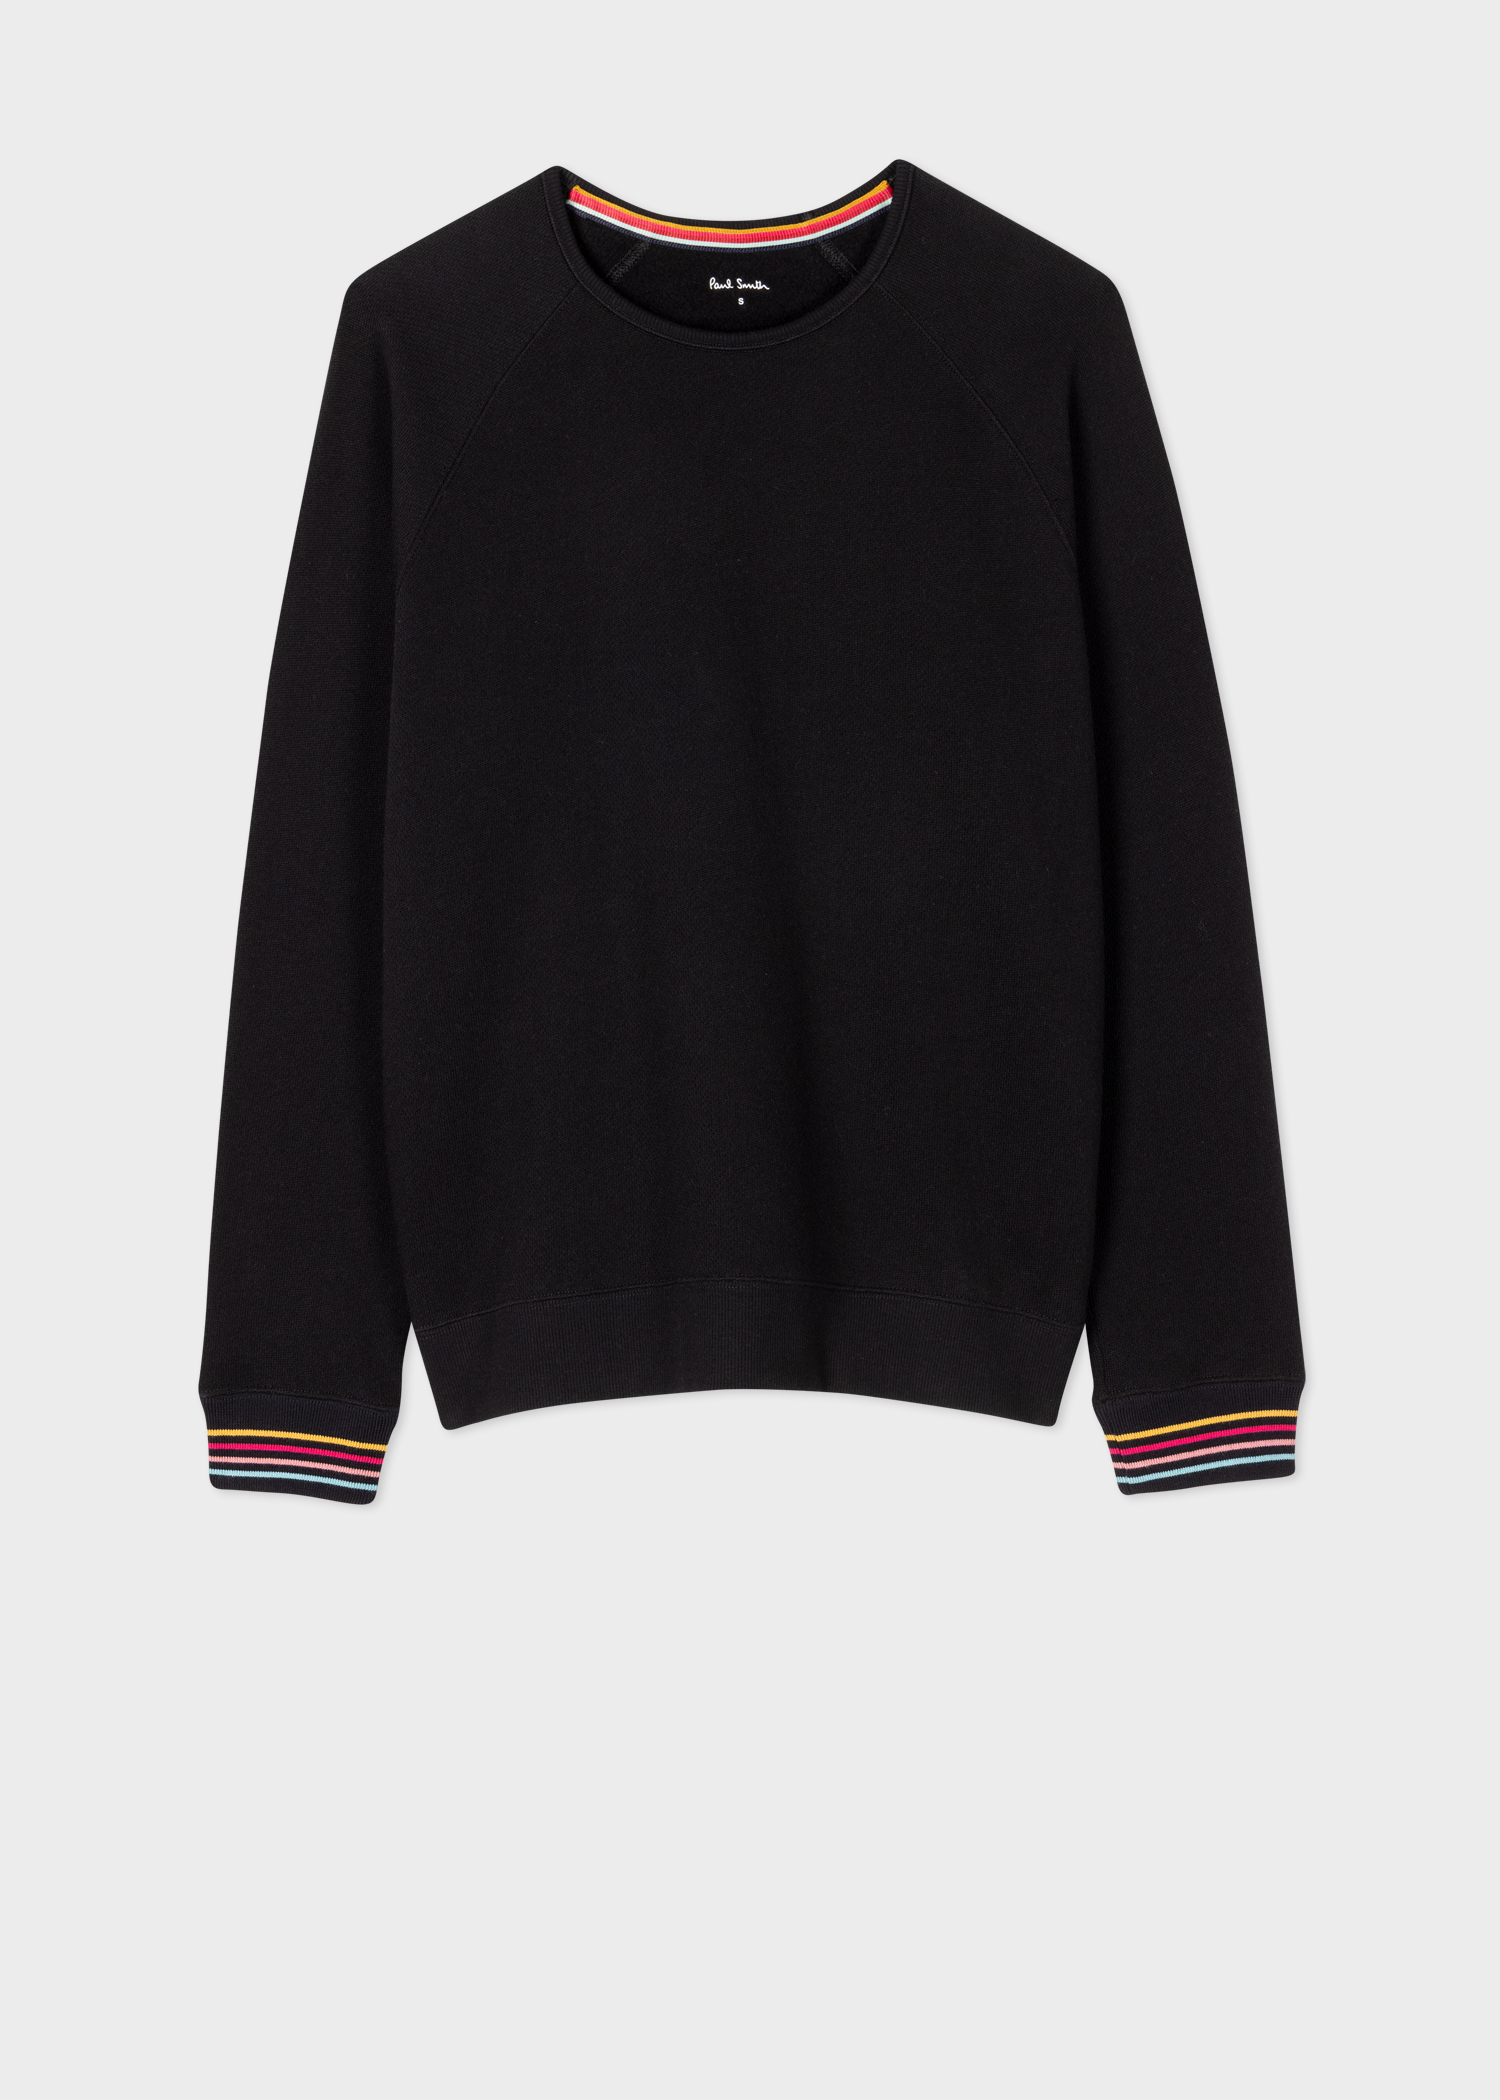 Women's Black Lounge Sweatshirt With 'Swirl Stripe' Cuffs